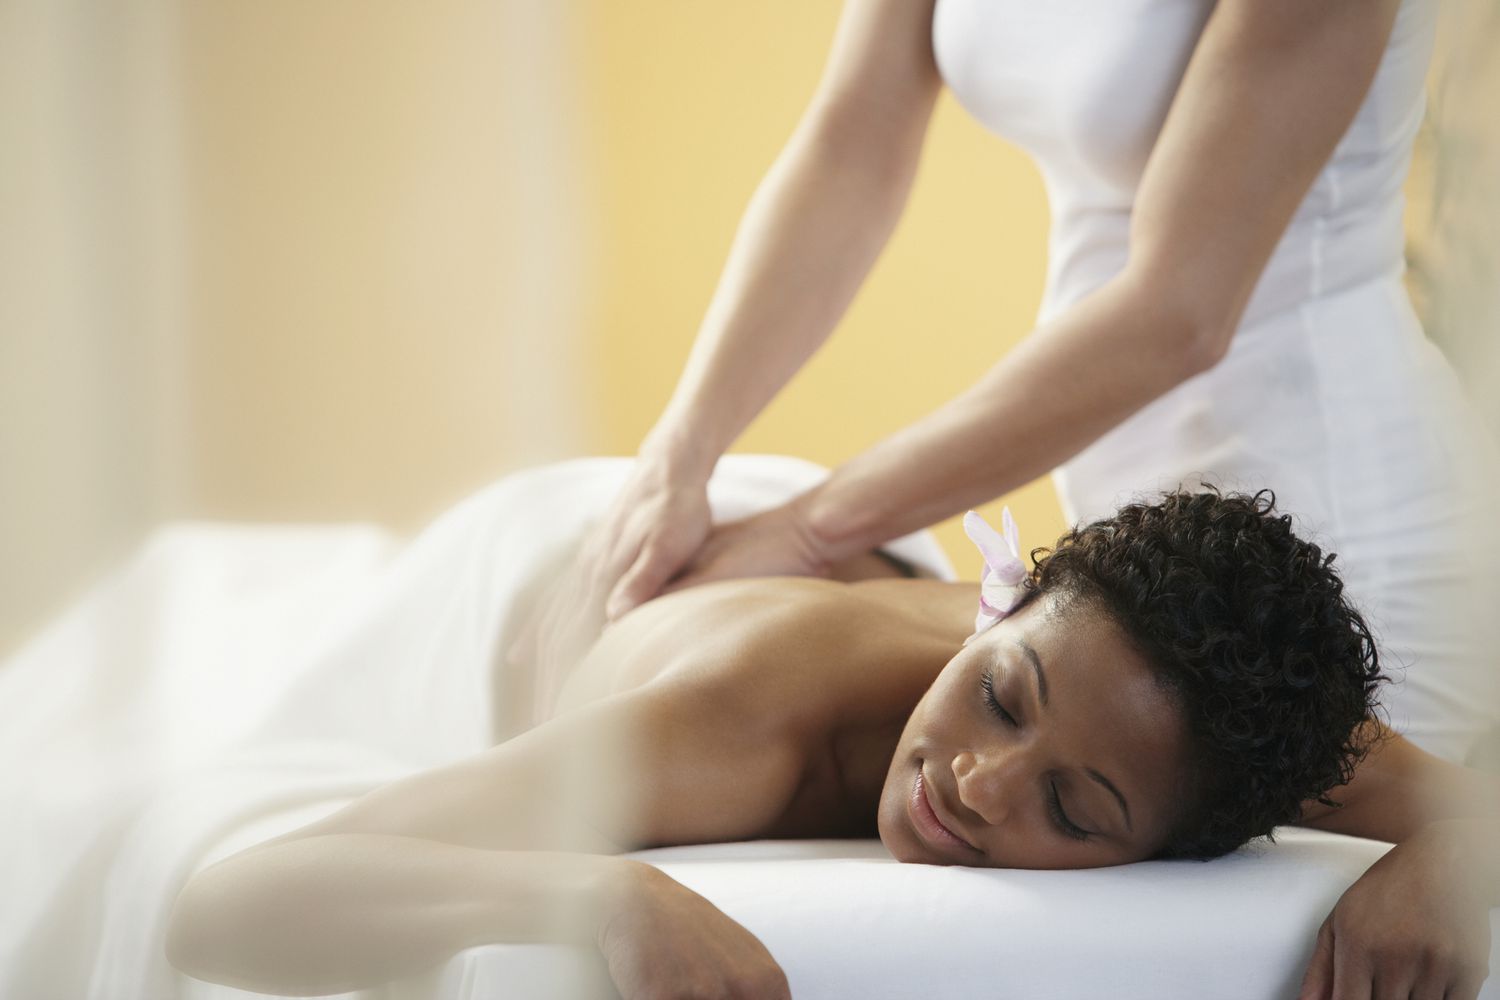 ad pineda add body slide massage videos photo